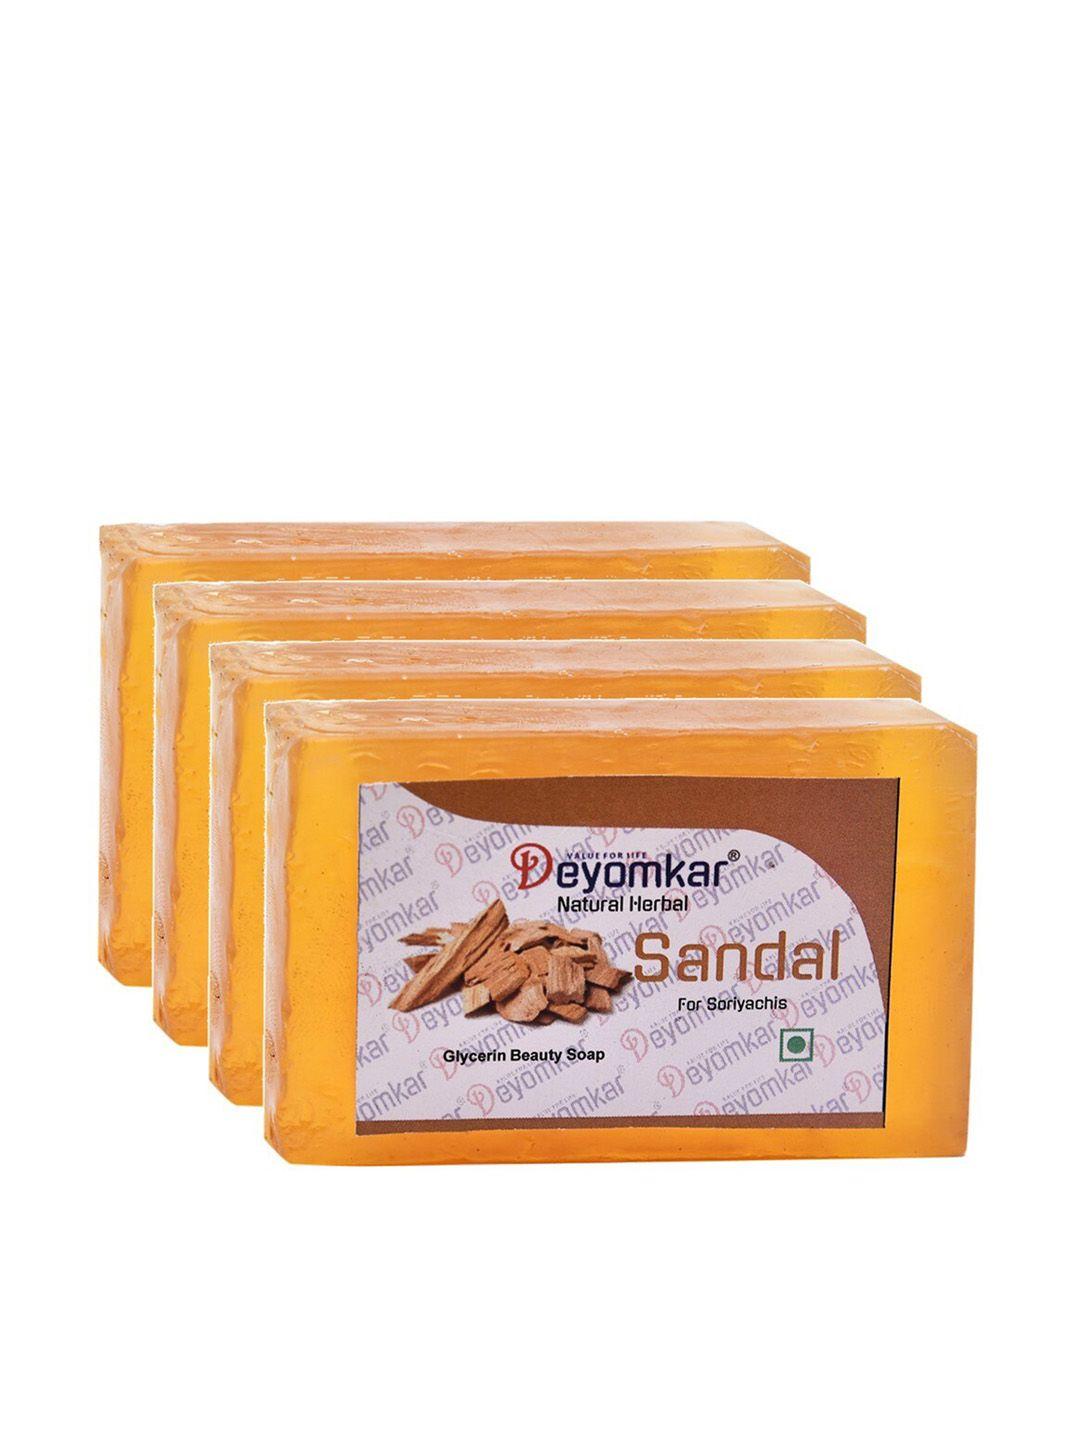 deyomkar set of 4 orange natural herbal sandalwood glycerin soap 480 gm